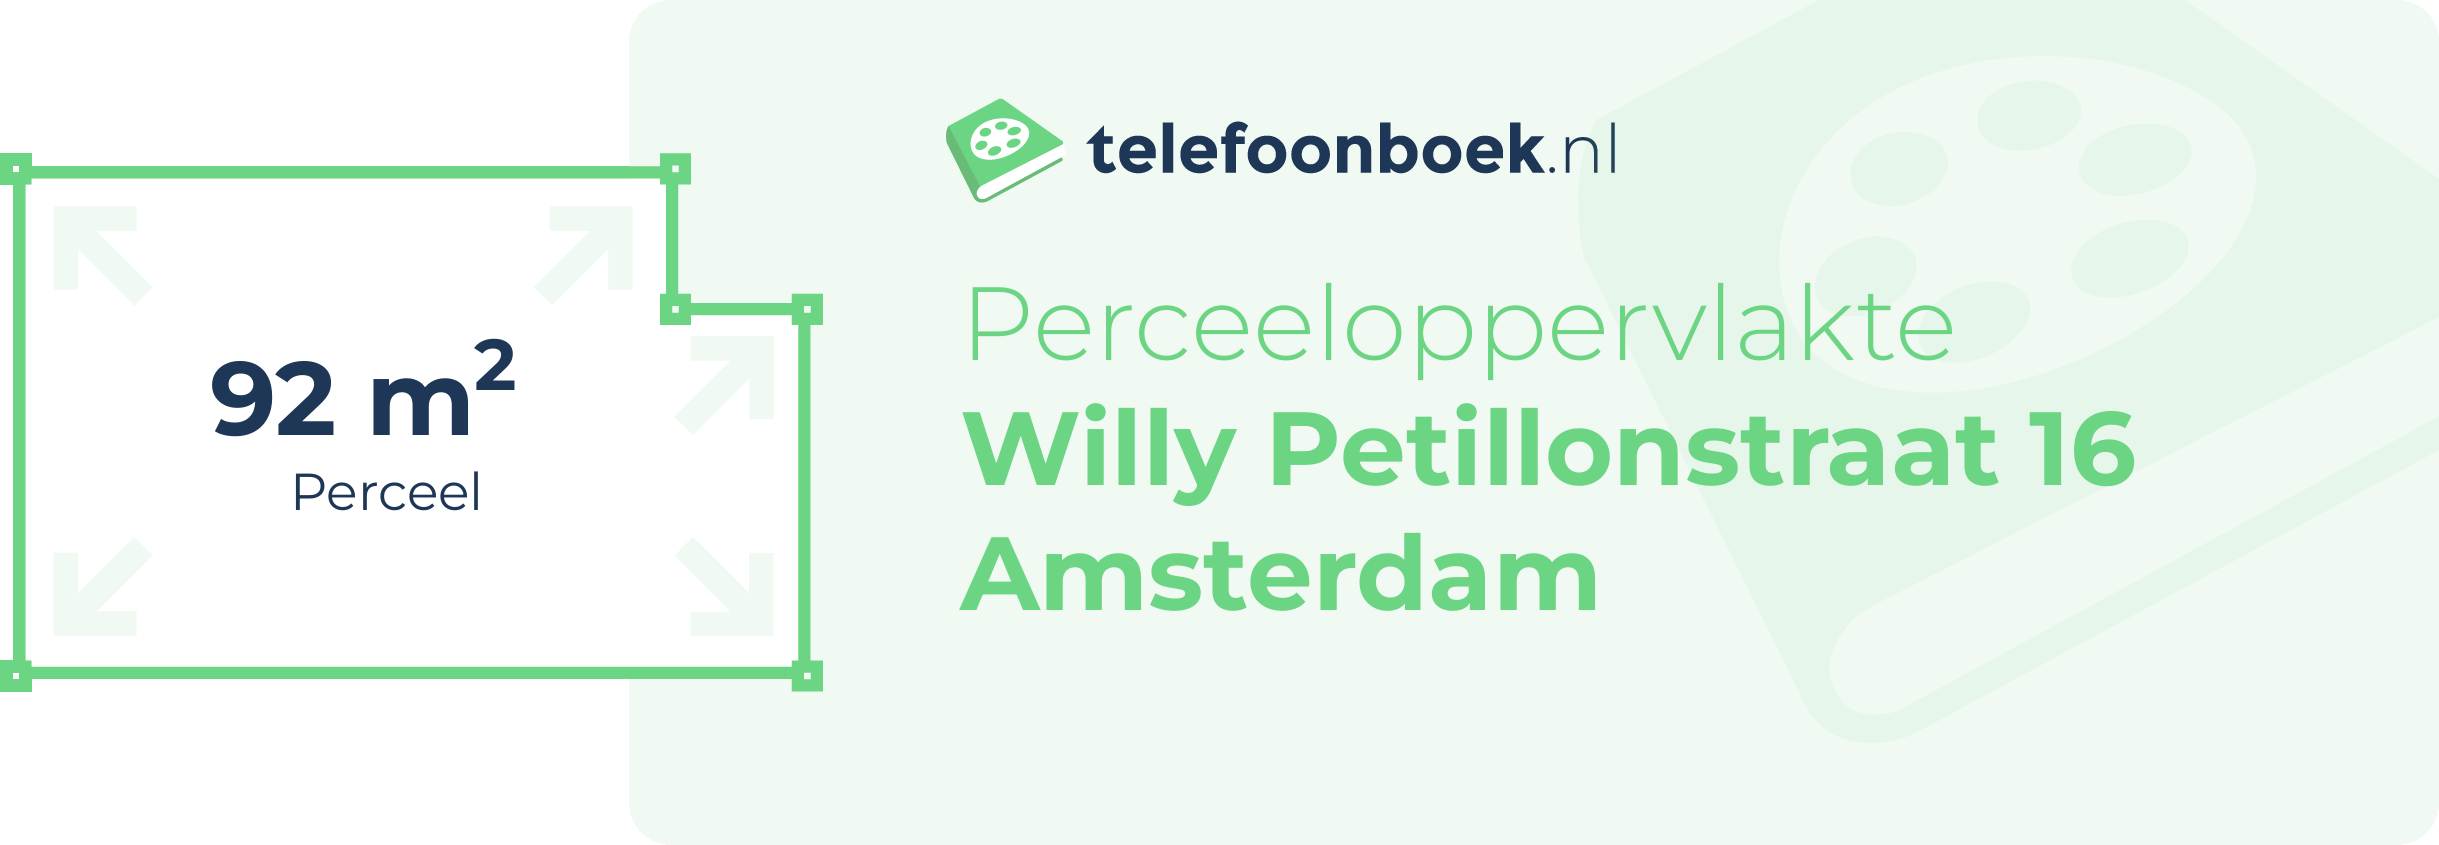 Perceeloppervlakte Willy Petillonstraat 16 Amsterdam